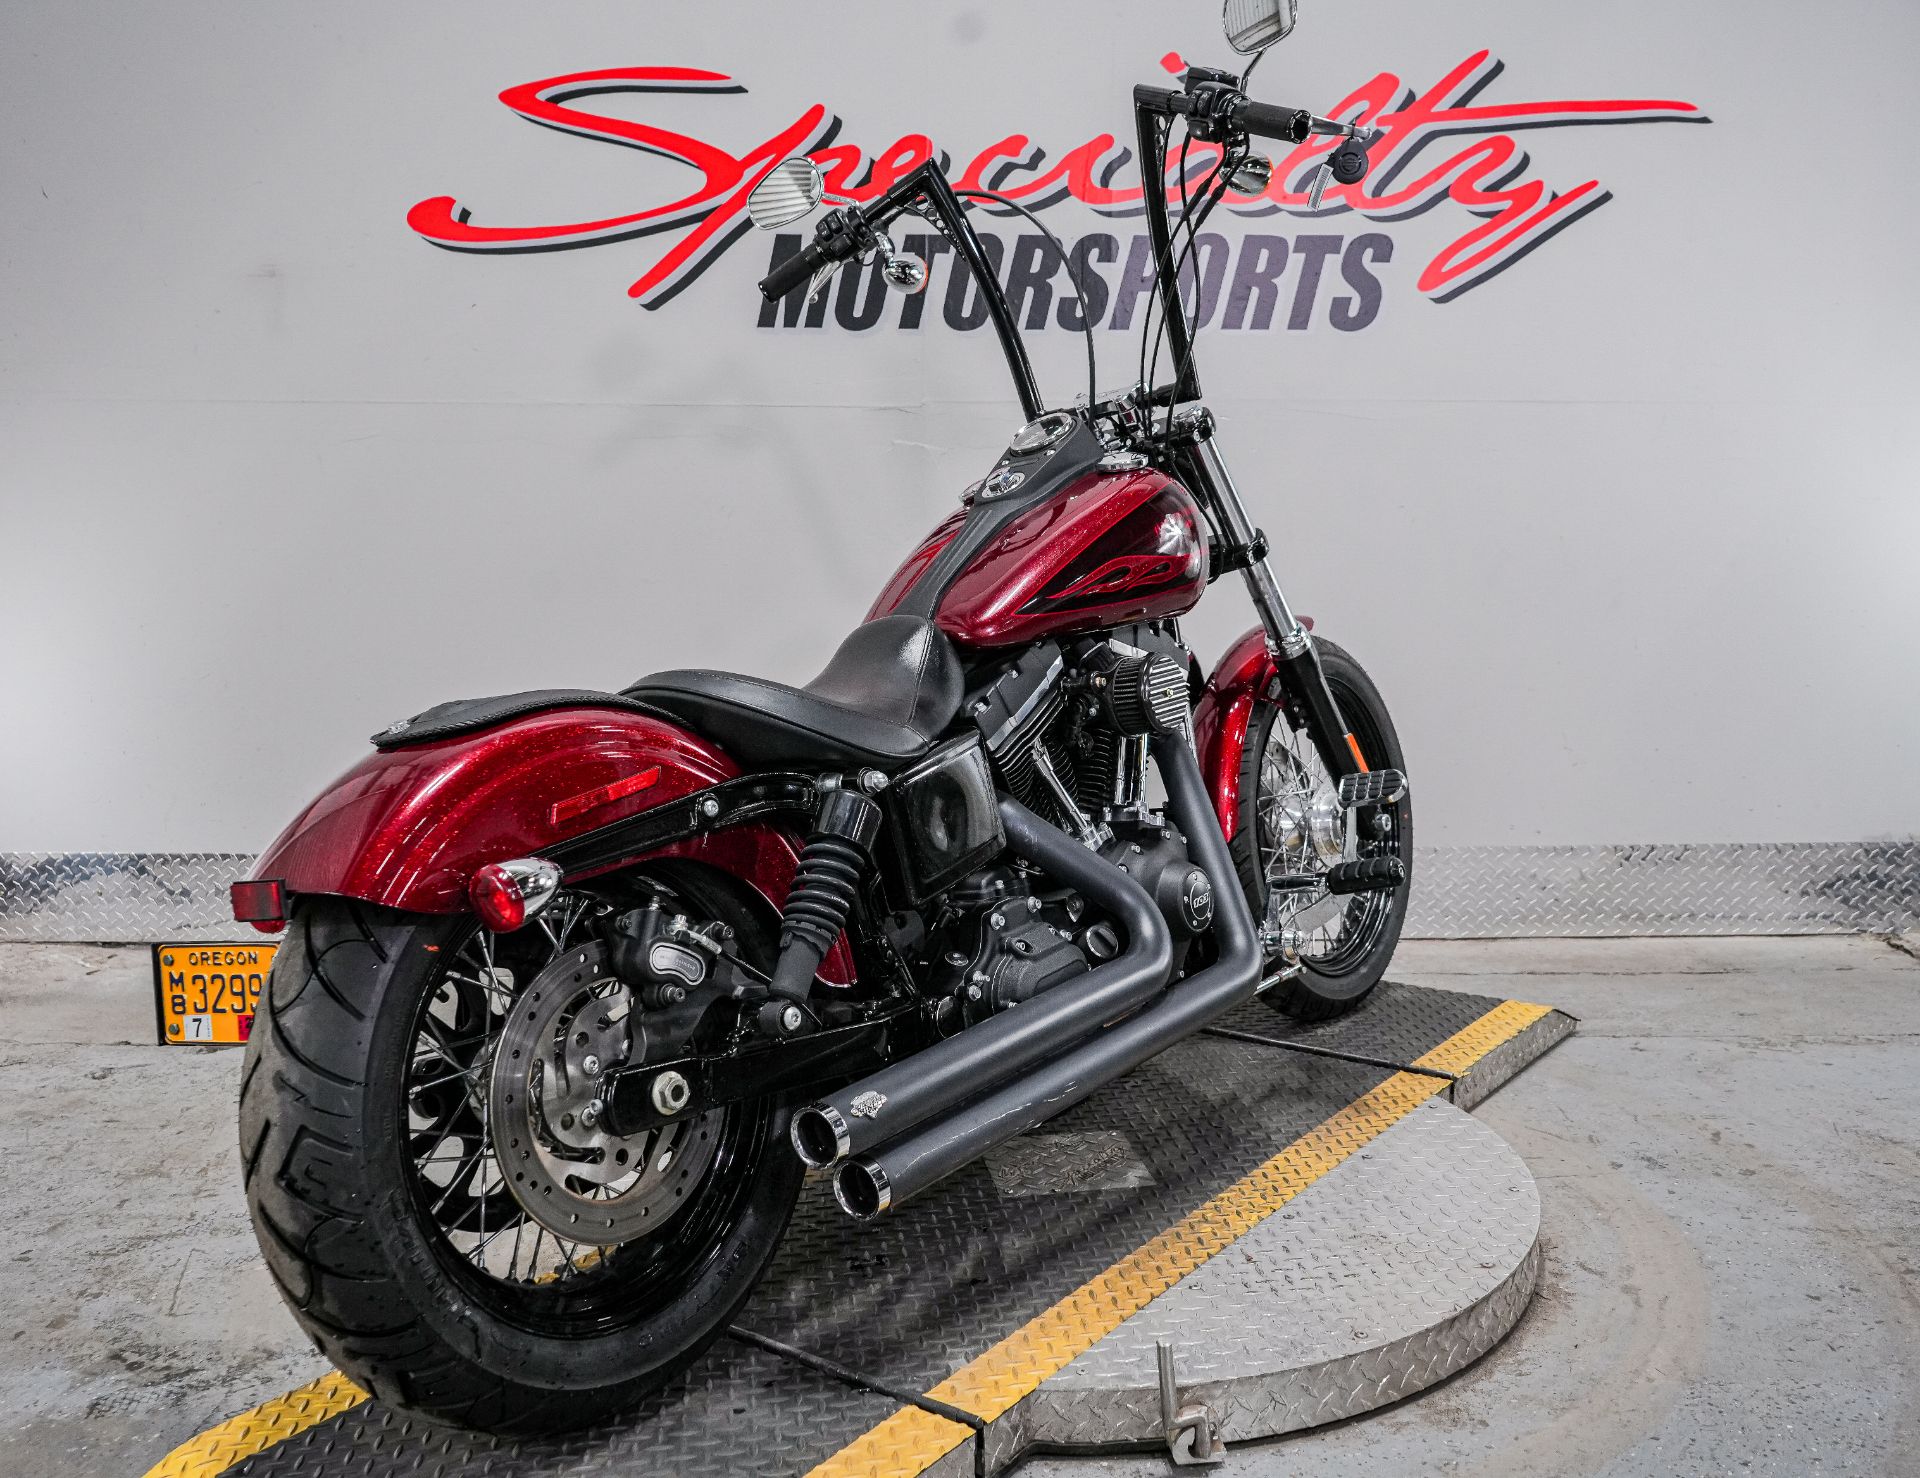 2017 Harley-Davidson Street Bob® in Sacramento, California - Photo 2